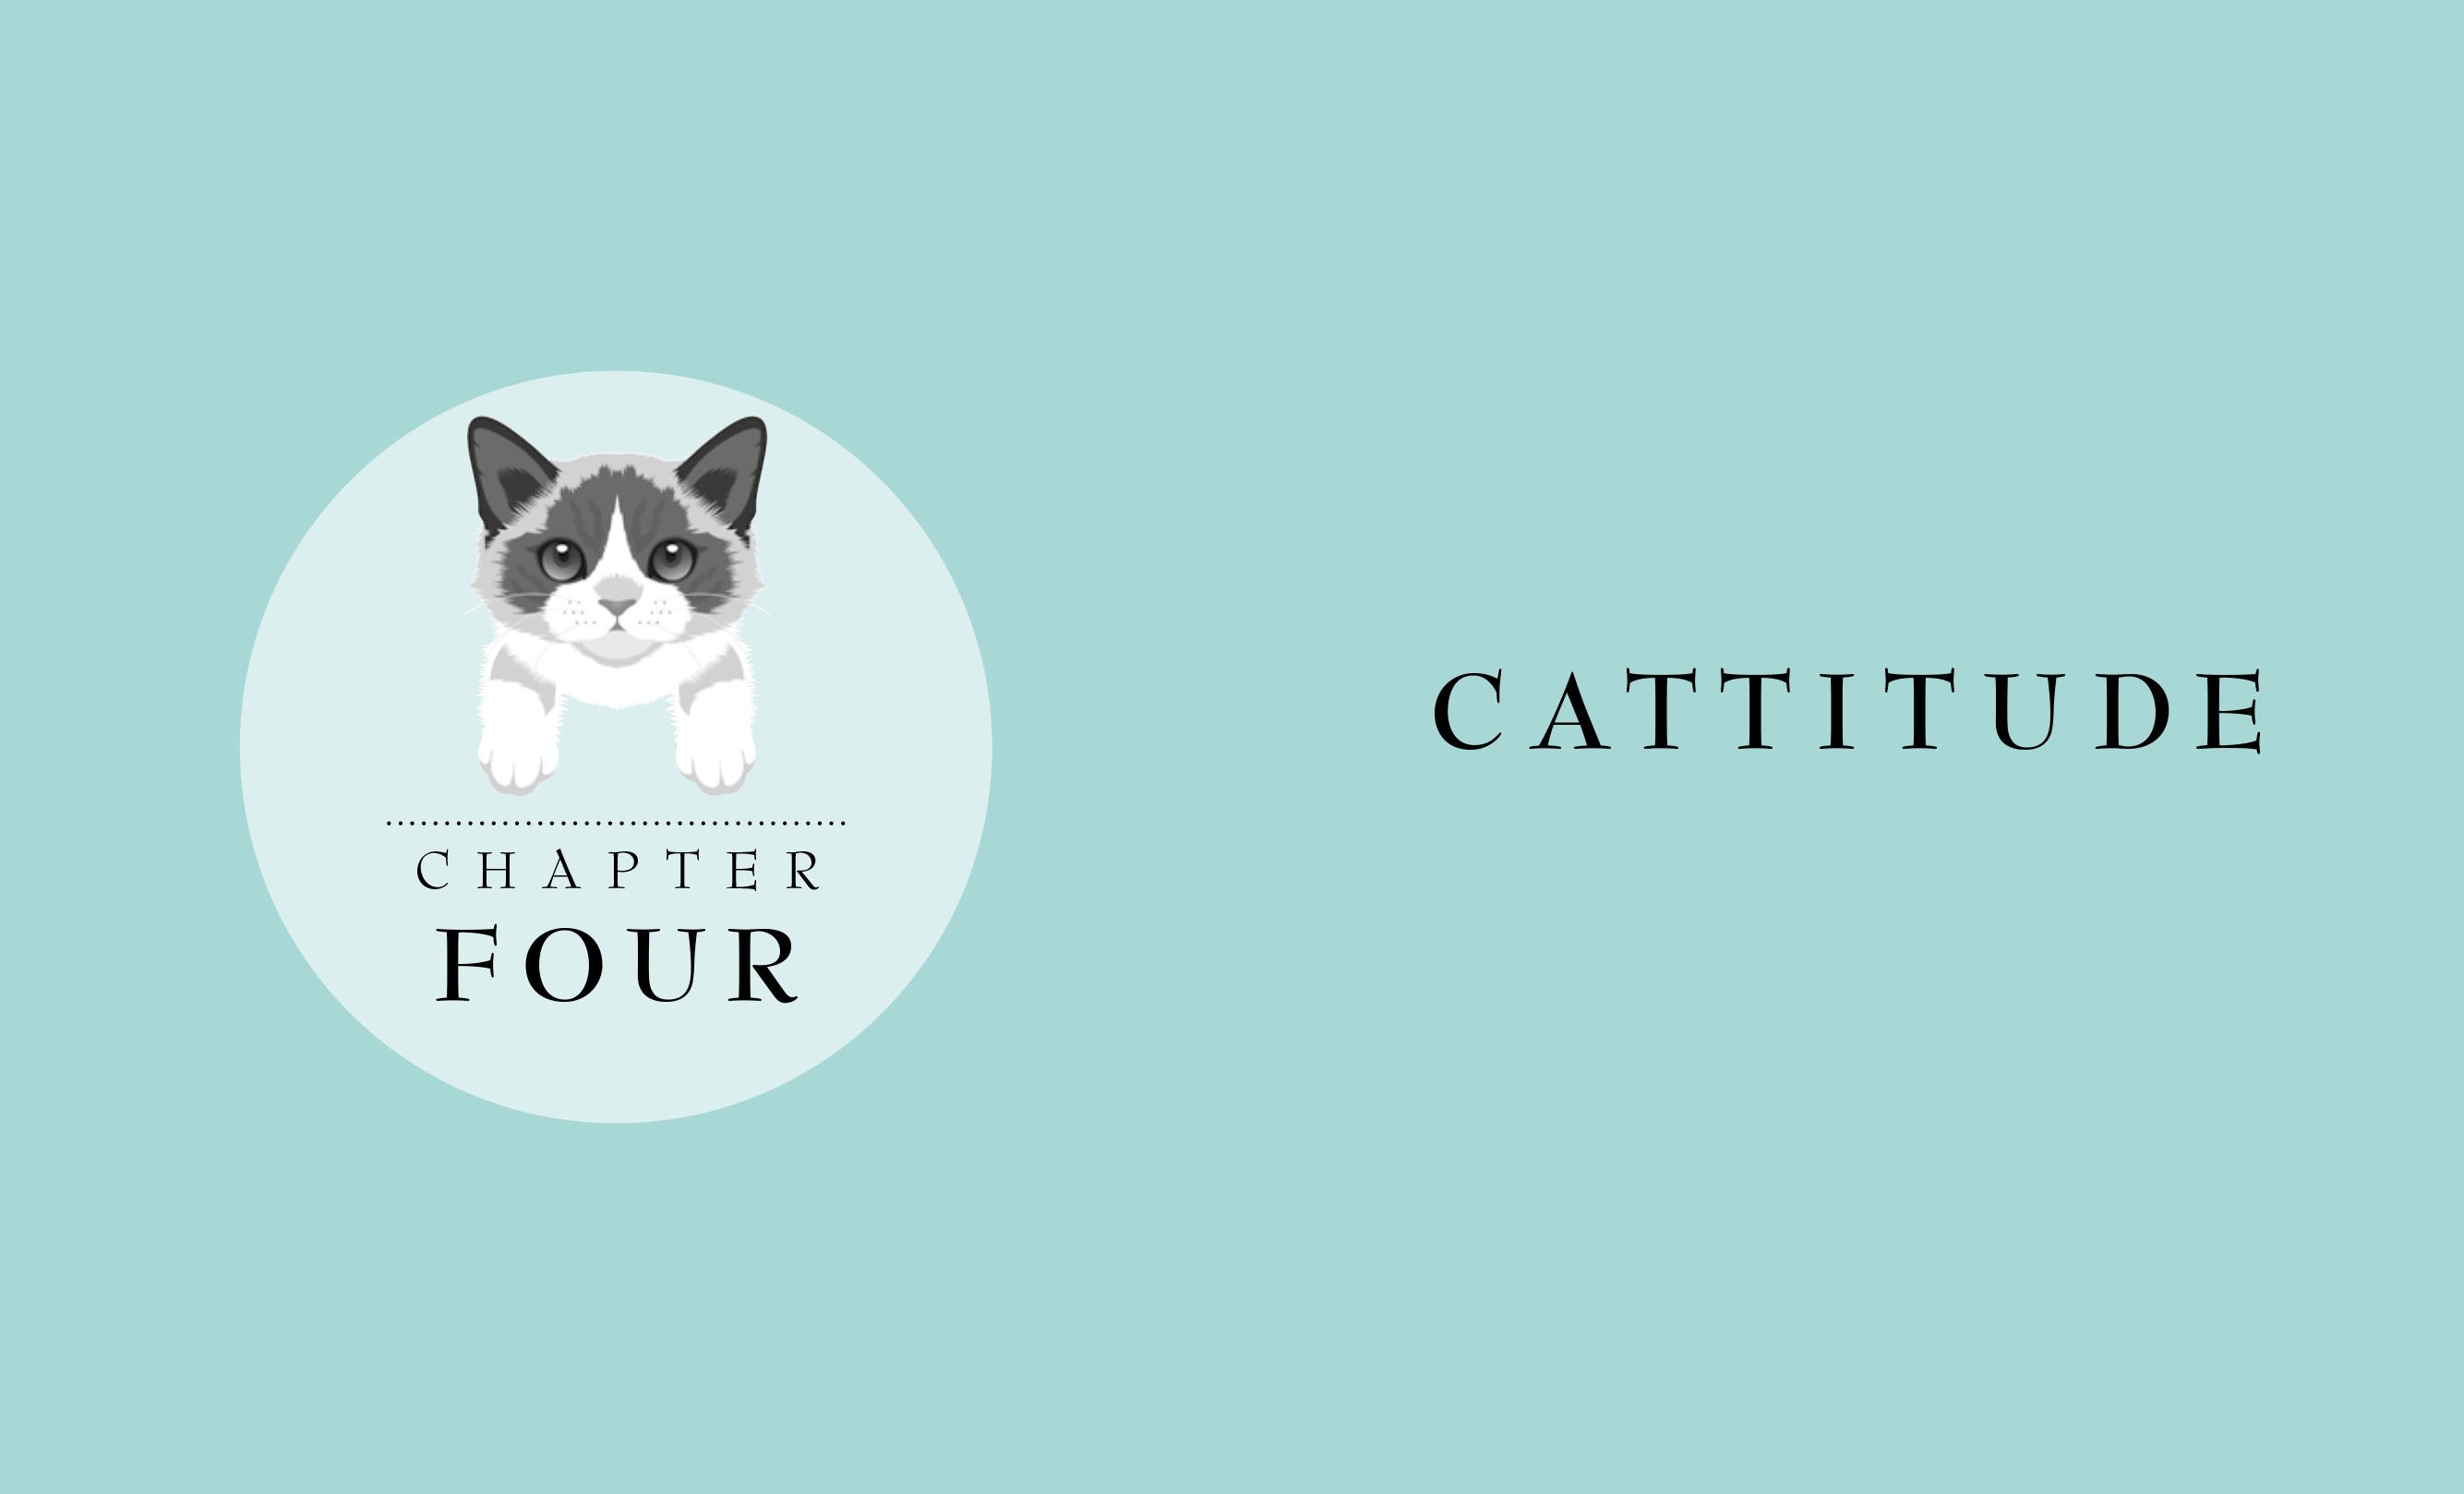 The Little Book of Cats | Book - Lifestory - Bookspeed